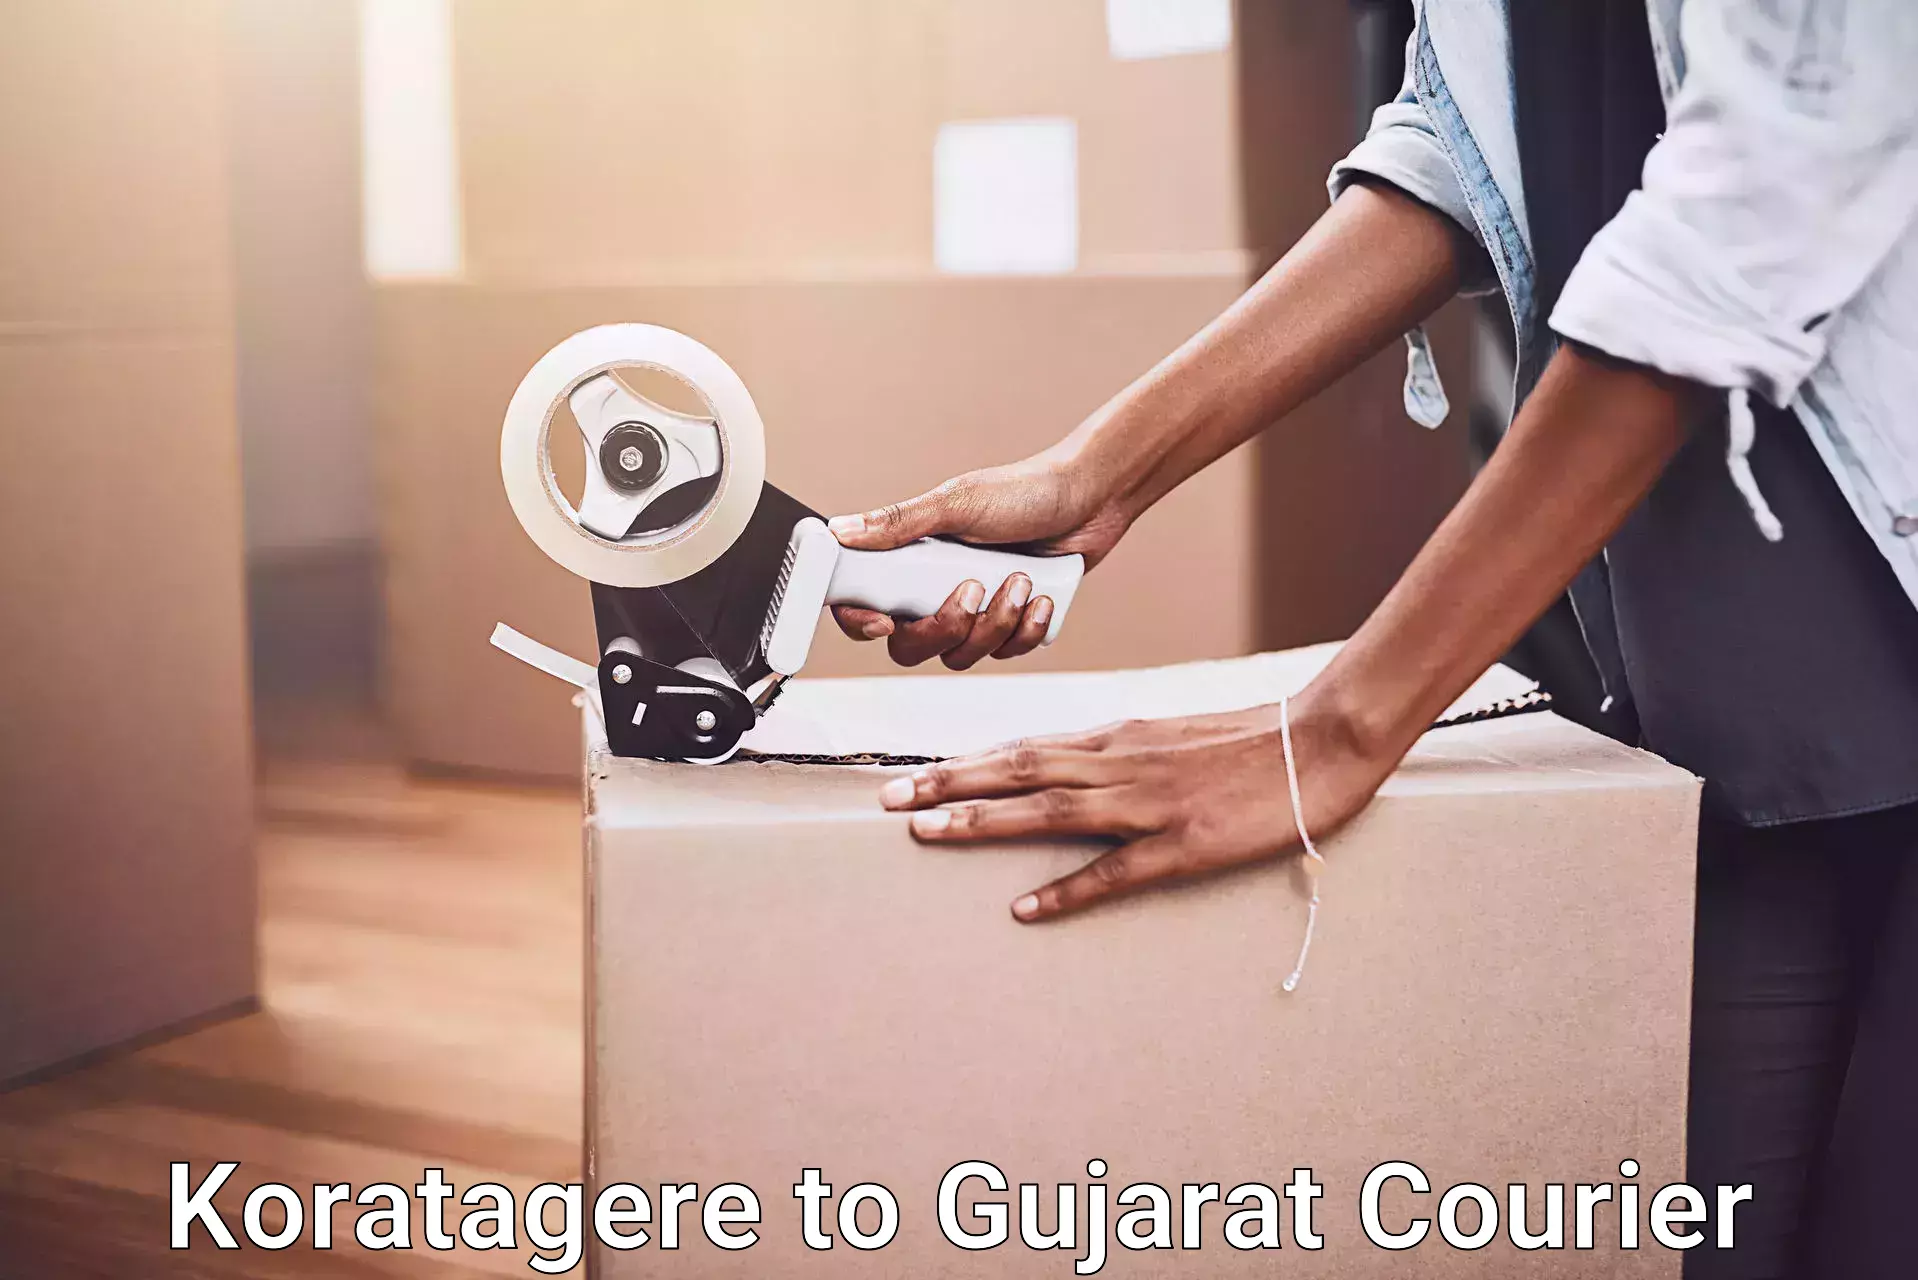 Furniture relocation experts Koratagere to Gujarat